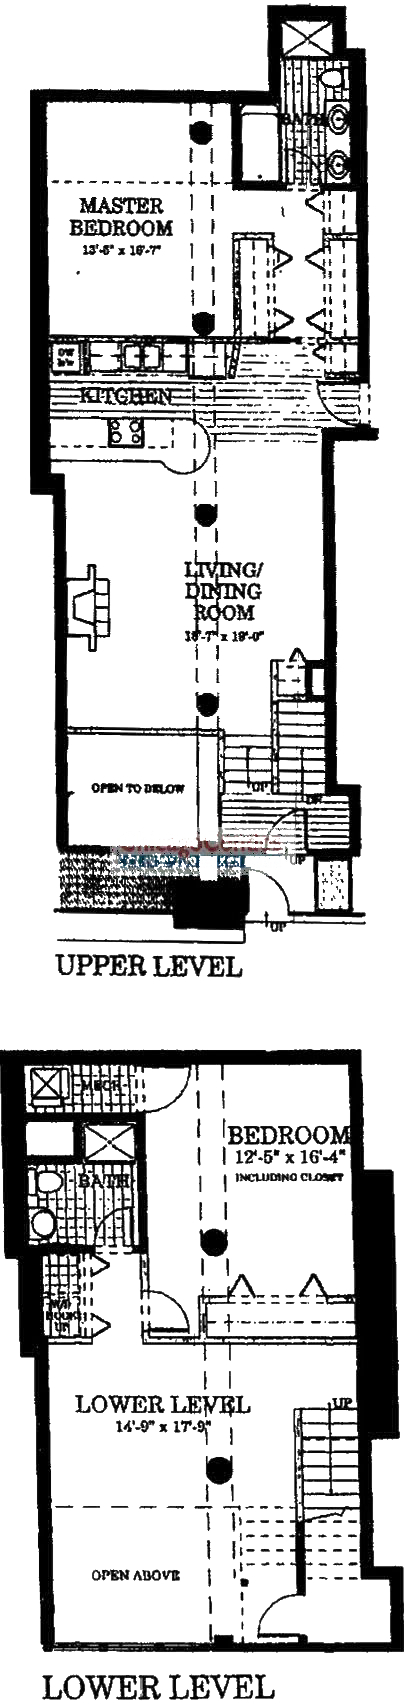 728 W Jackson Floorplan - 104 Duplex Tier*